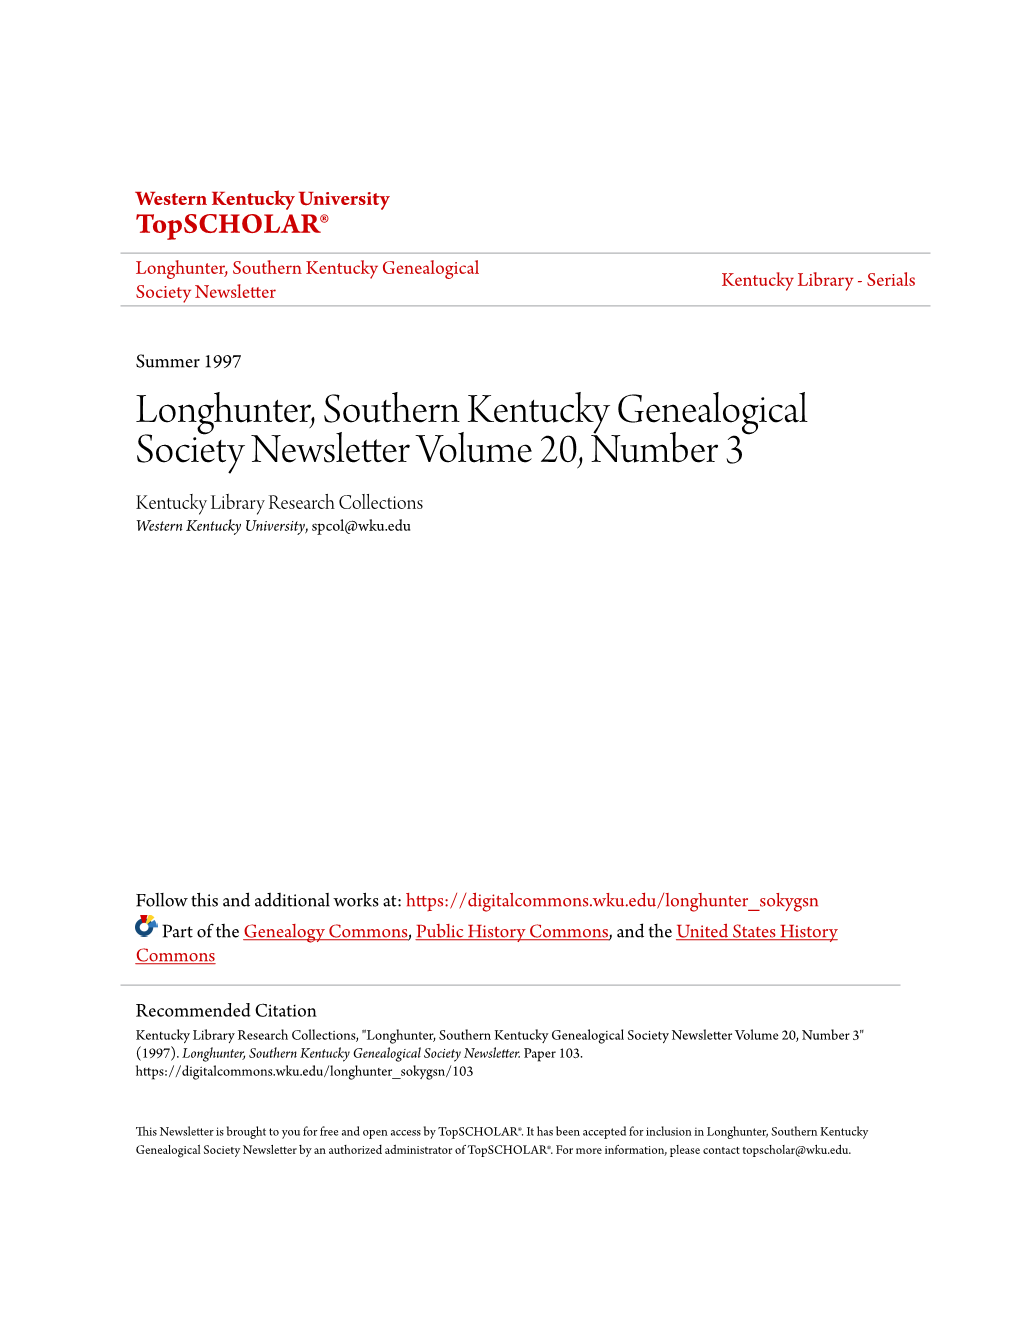 Longhunter, Southern Kentucky Genealogical Society Newsletter Volume 20, Number 3 Kentucky Library Research Collections Western Kentucky University, Spcol@Wku.Edu